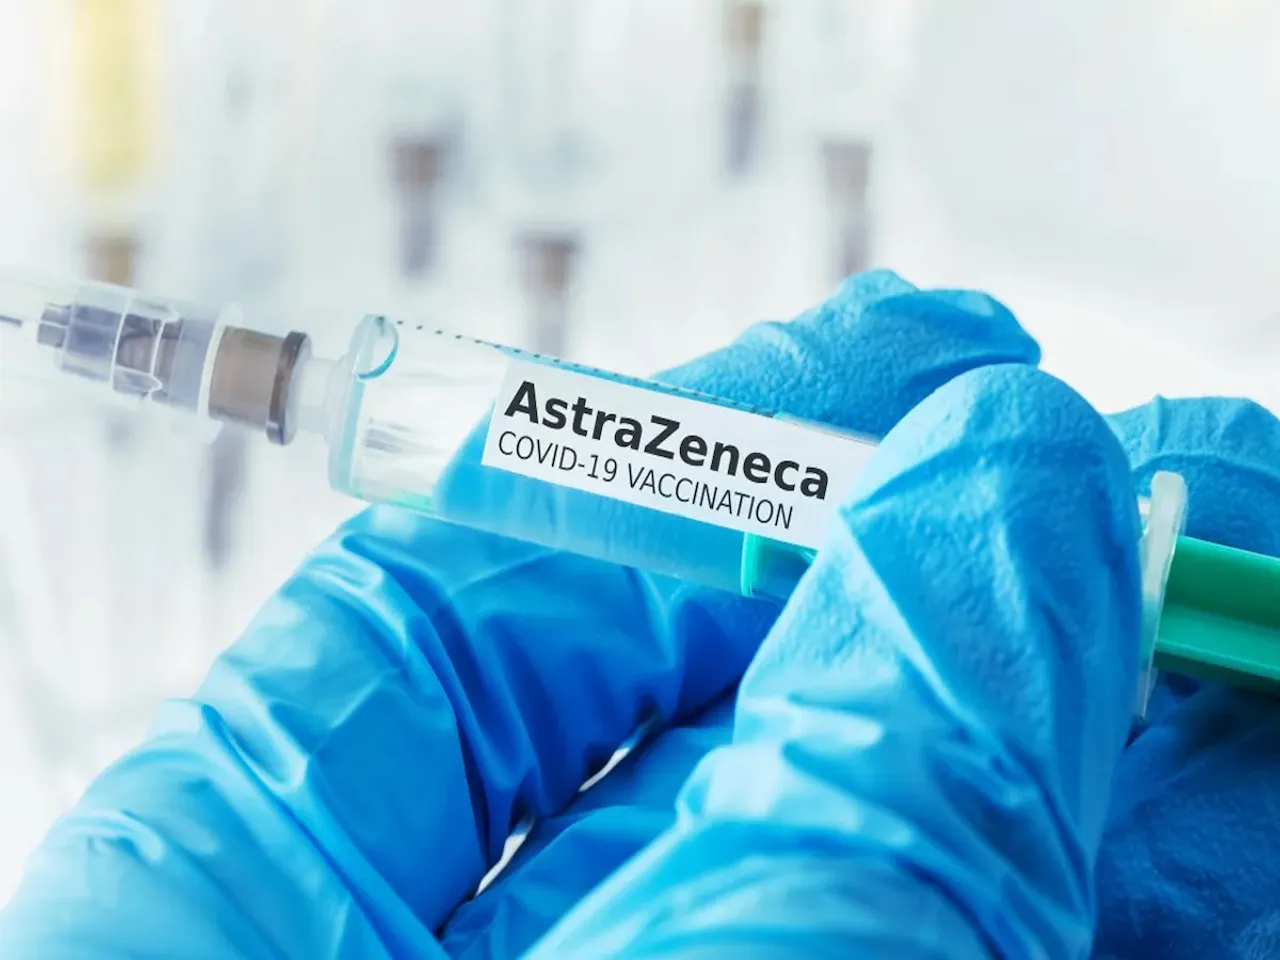 AstraZeneca Withdraws Covishield, Admits It May Cause Rare Disorder: Report